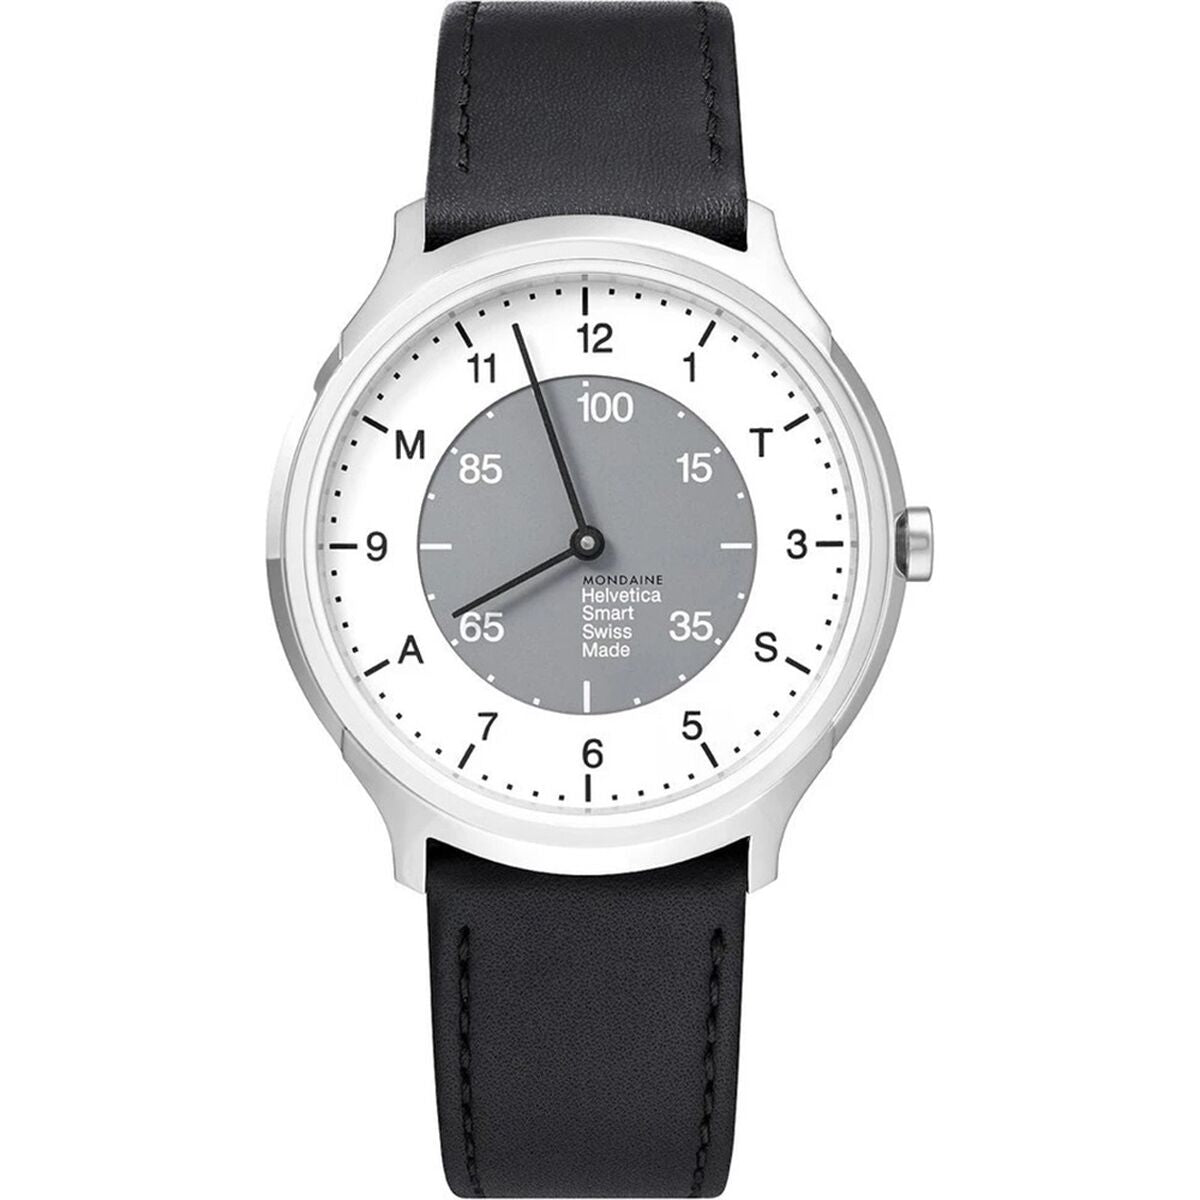 Kaufe Smartwatch Mondaine HELVETICA bei AWK Flagship um € 305.00